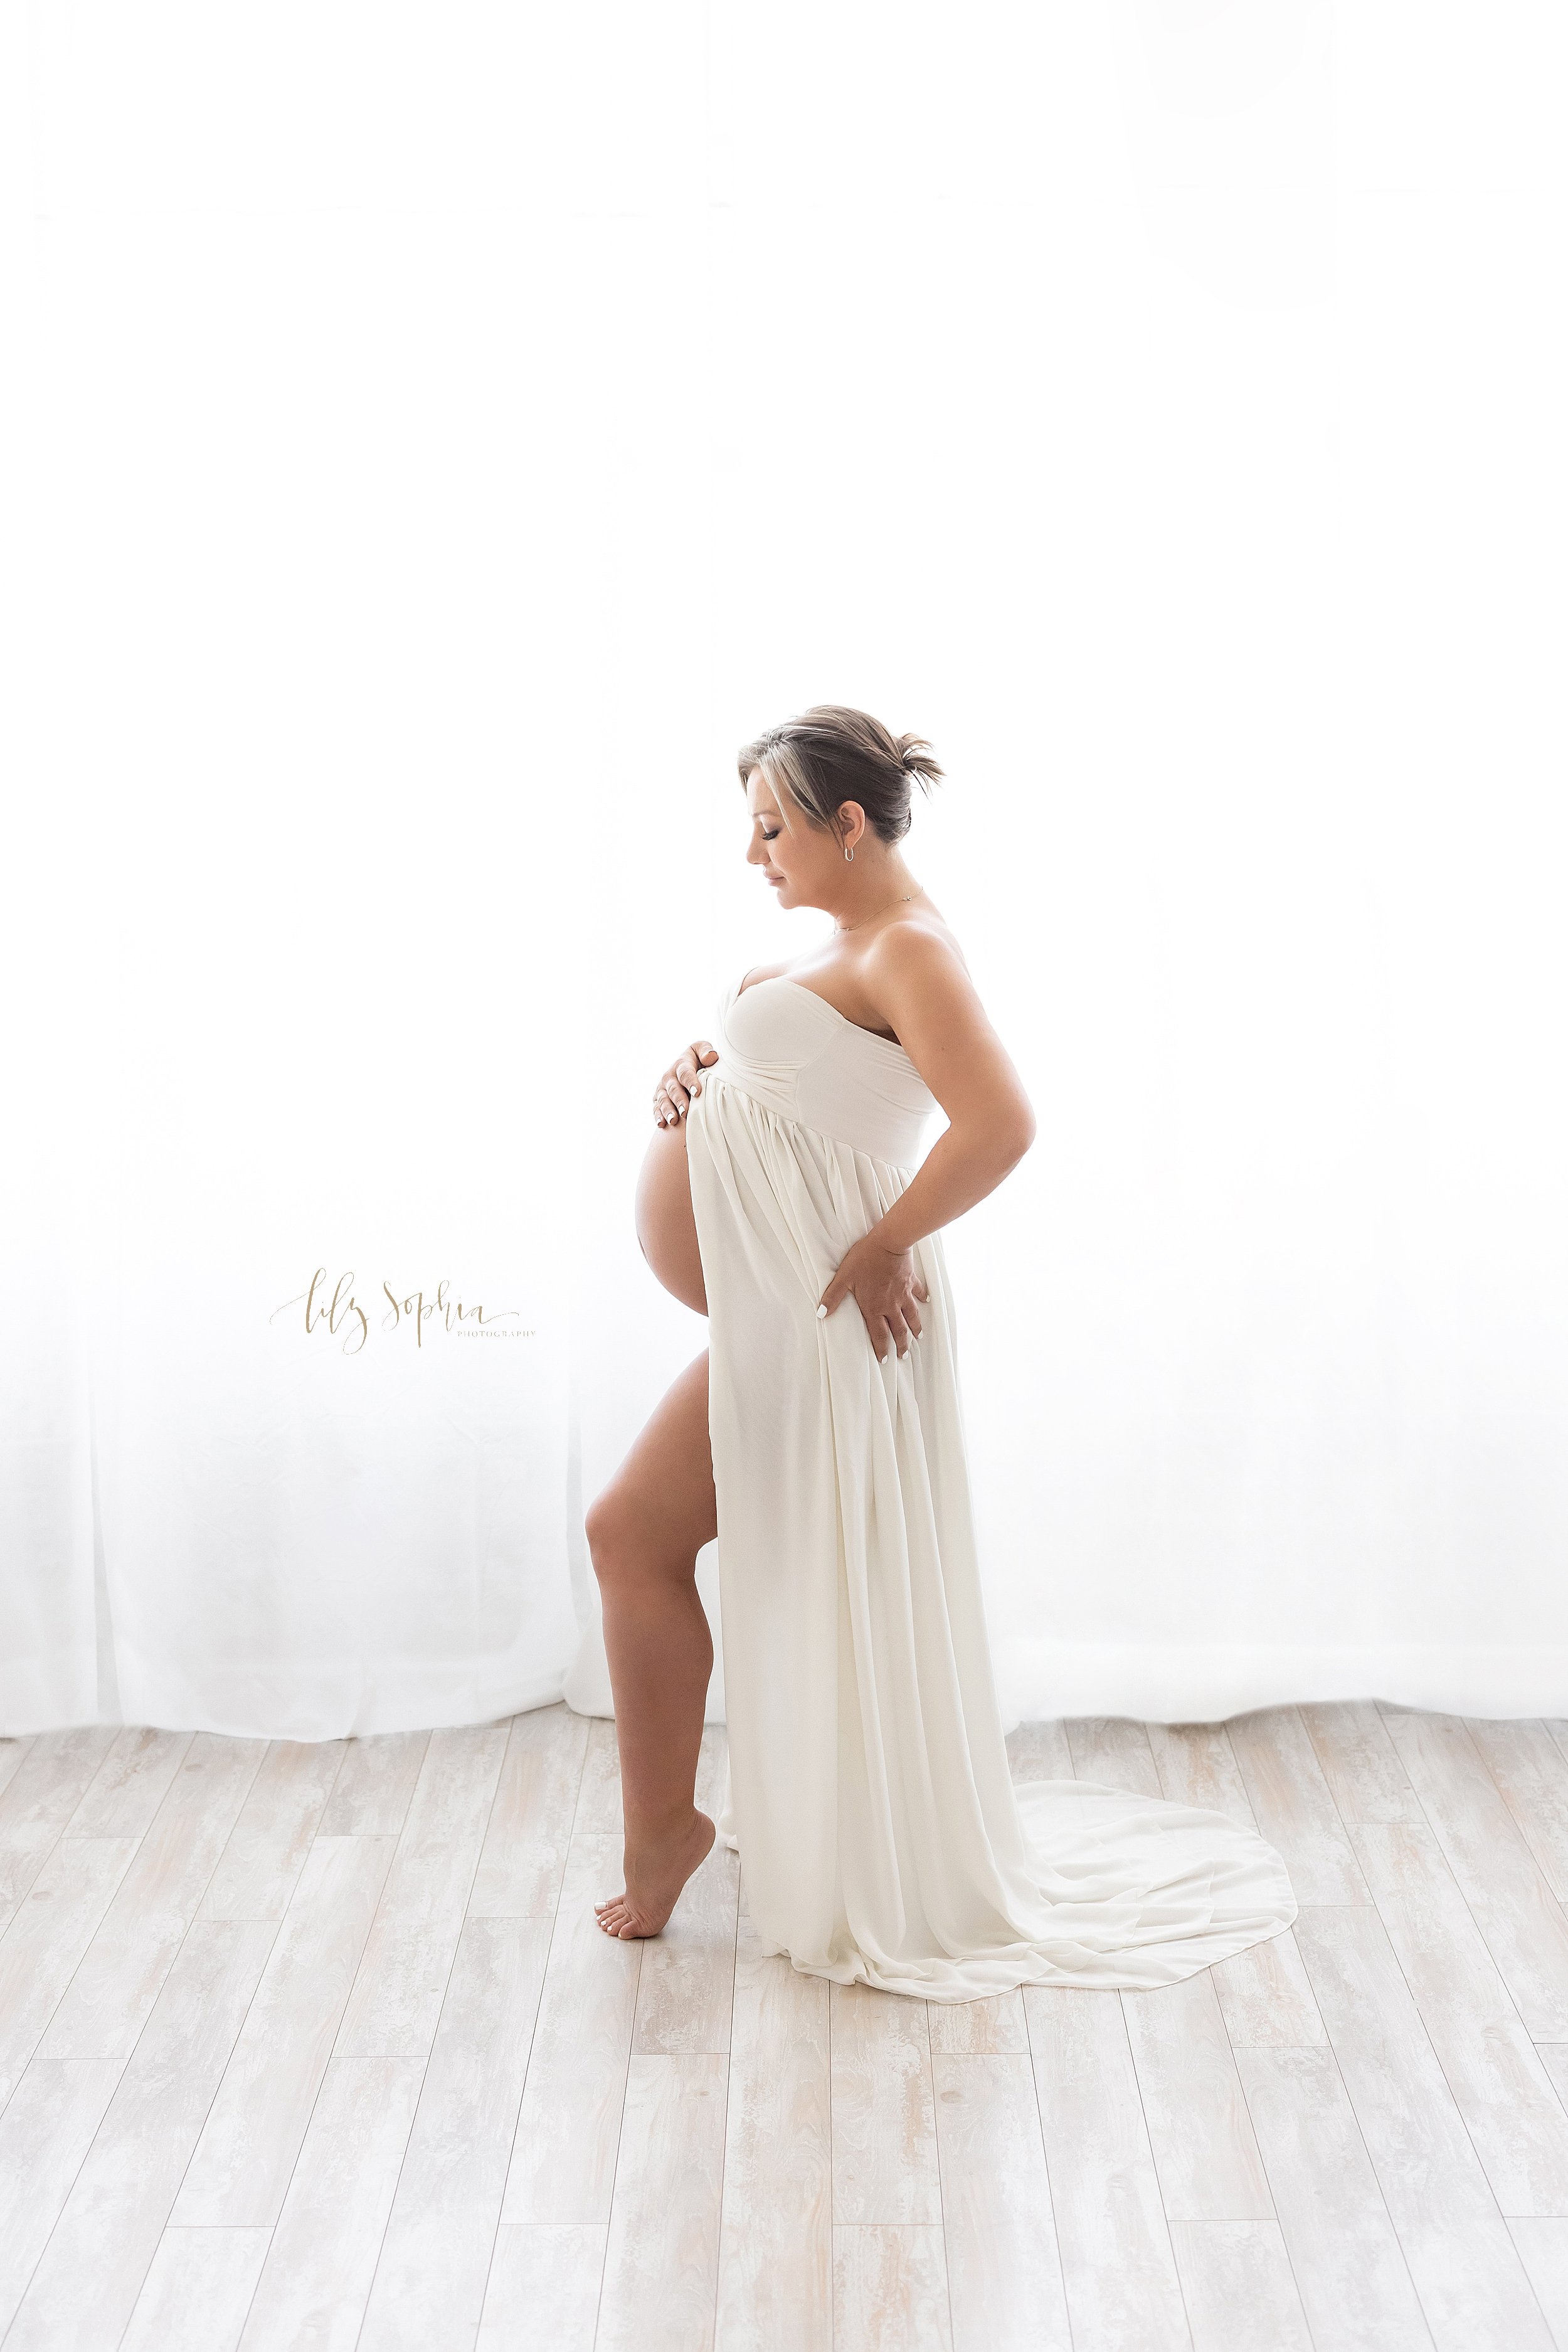 intown-atlanta-grant-park-decatur-kirkwood-ellenwood-maternity-baby-boy-pregnancy-studio-photoshoot_2305.jpg